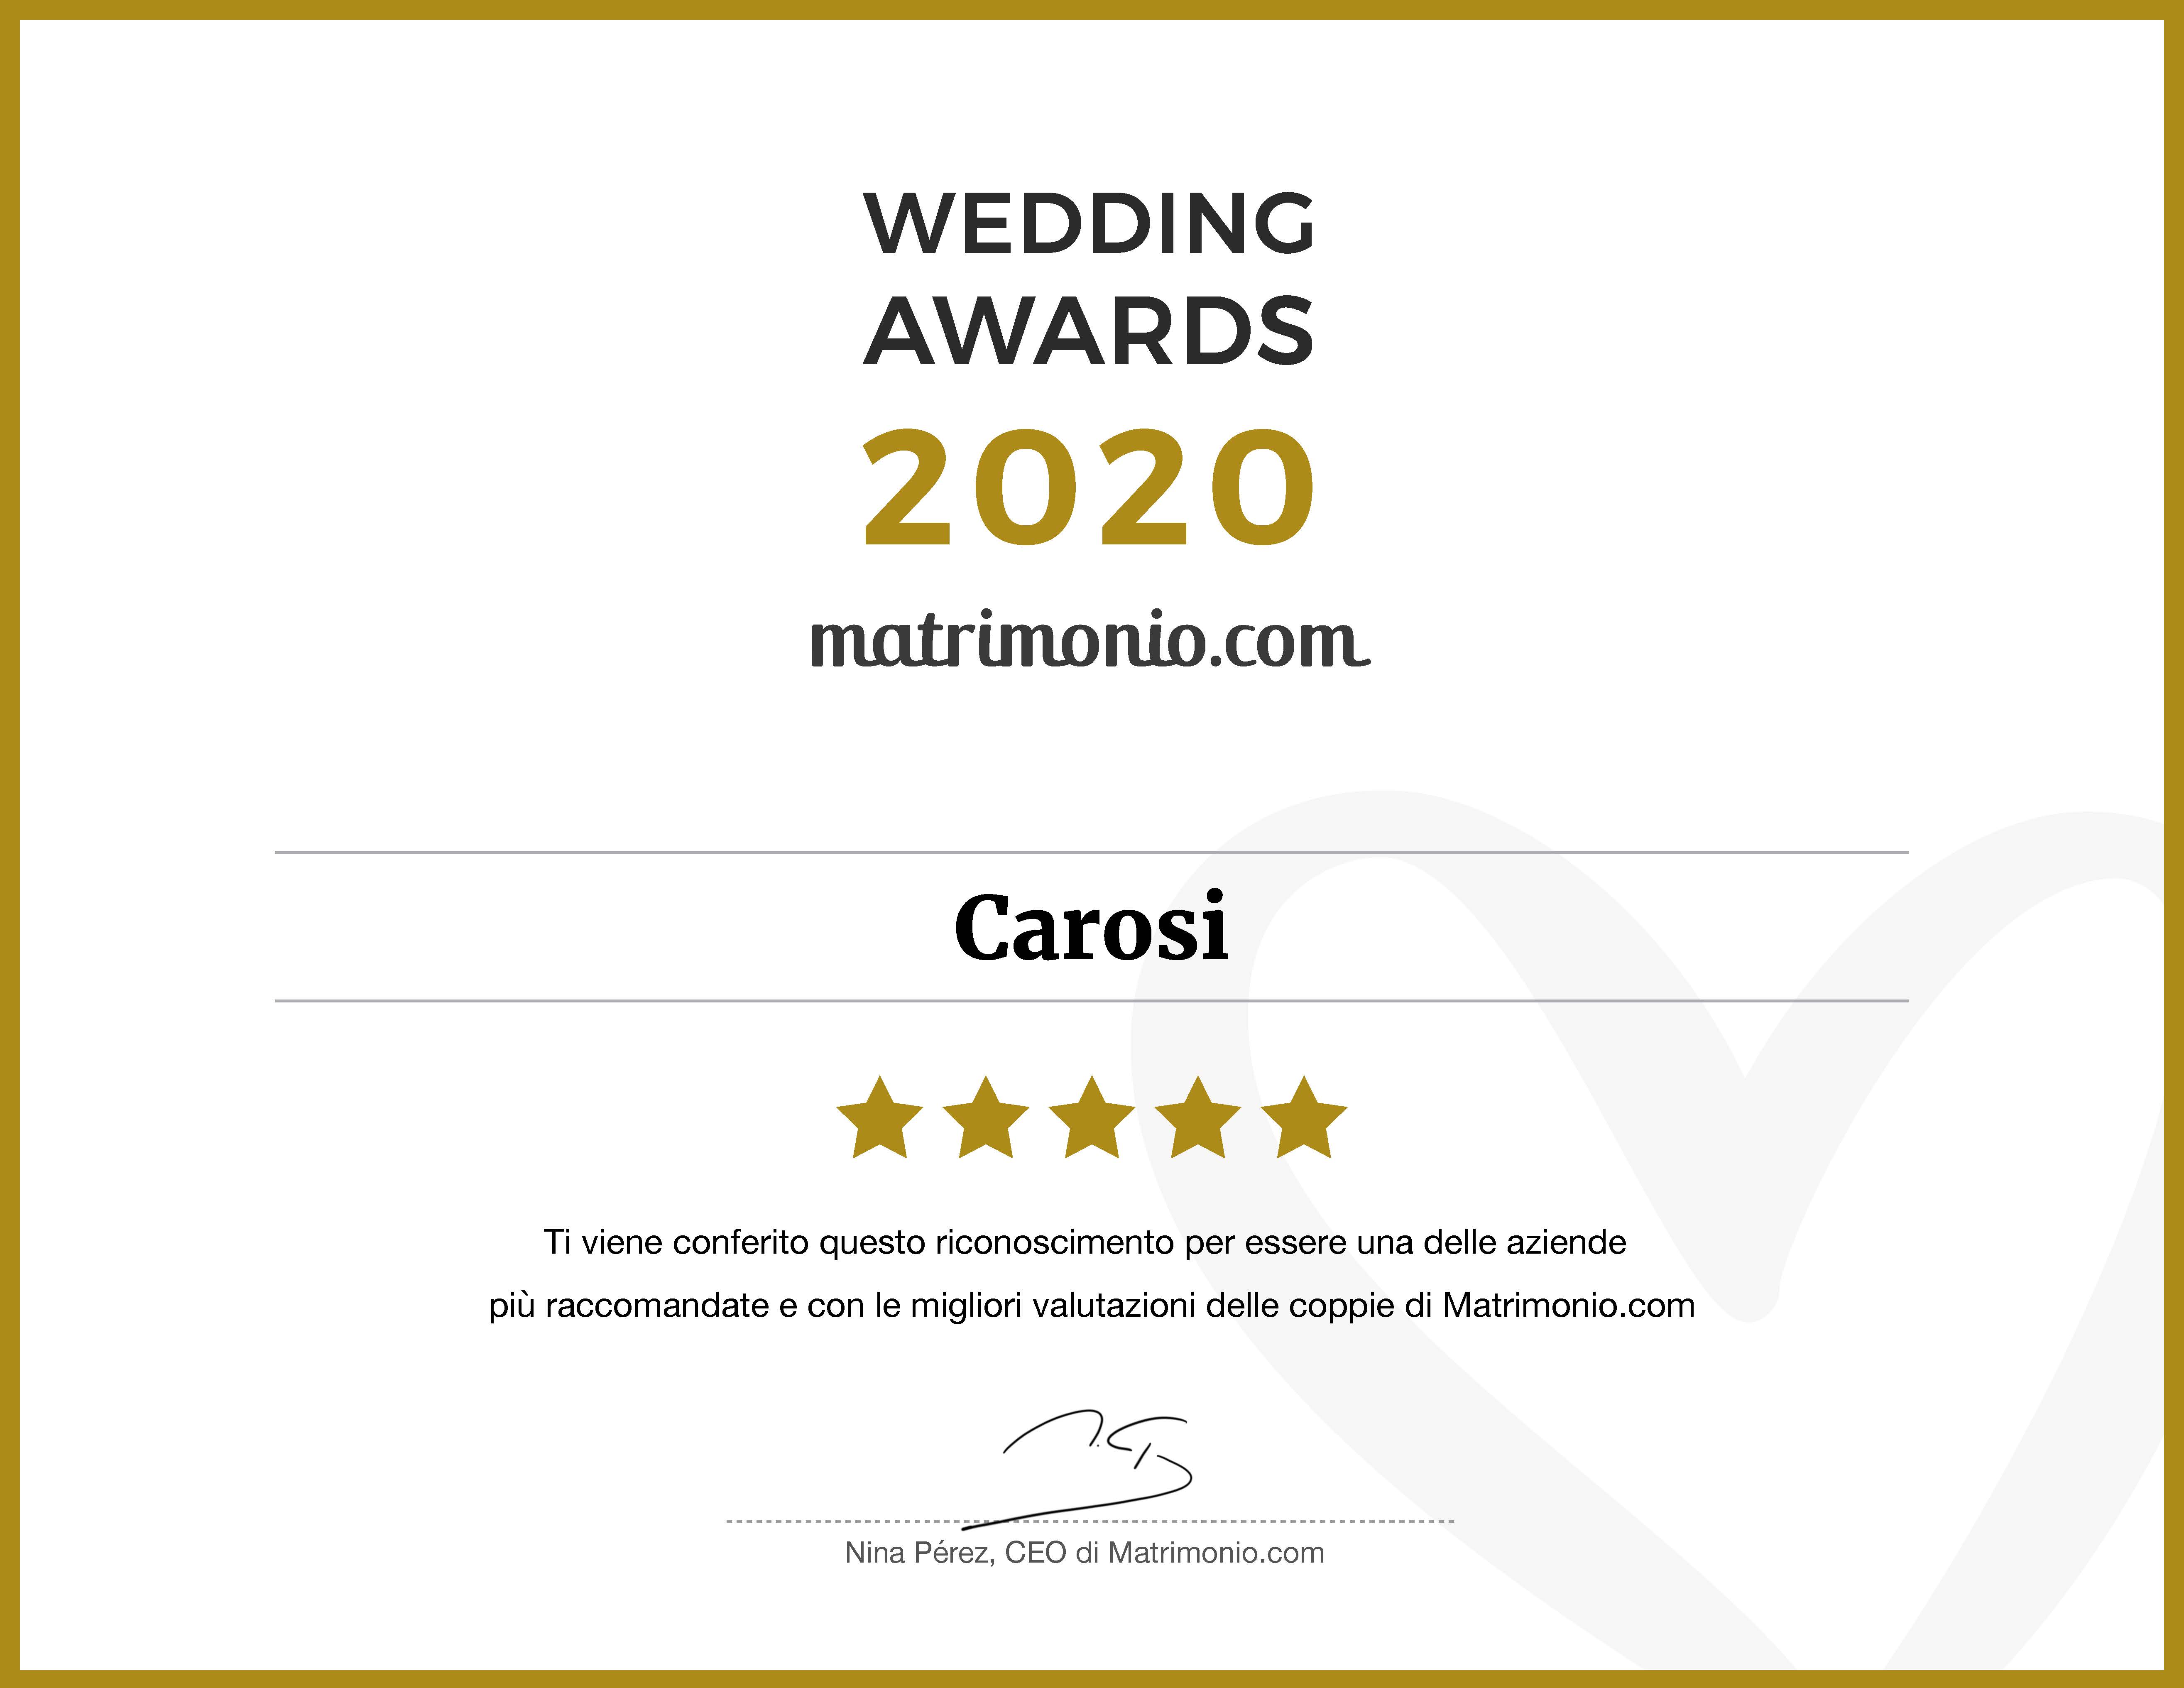 Sartoria Carosi - Wedding Awards 2020 